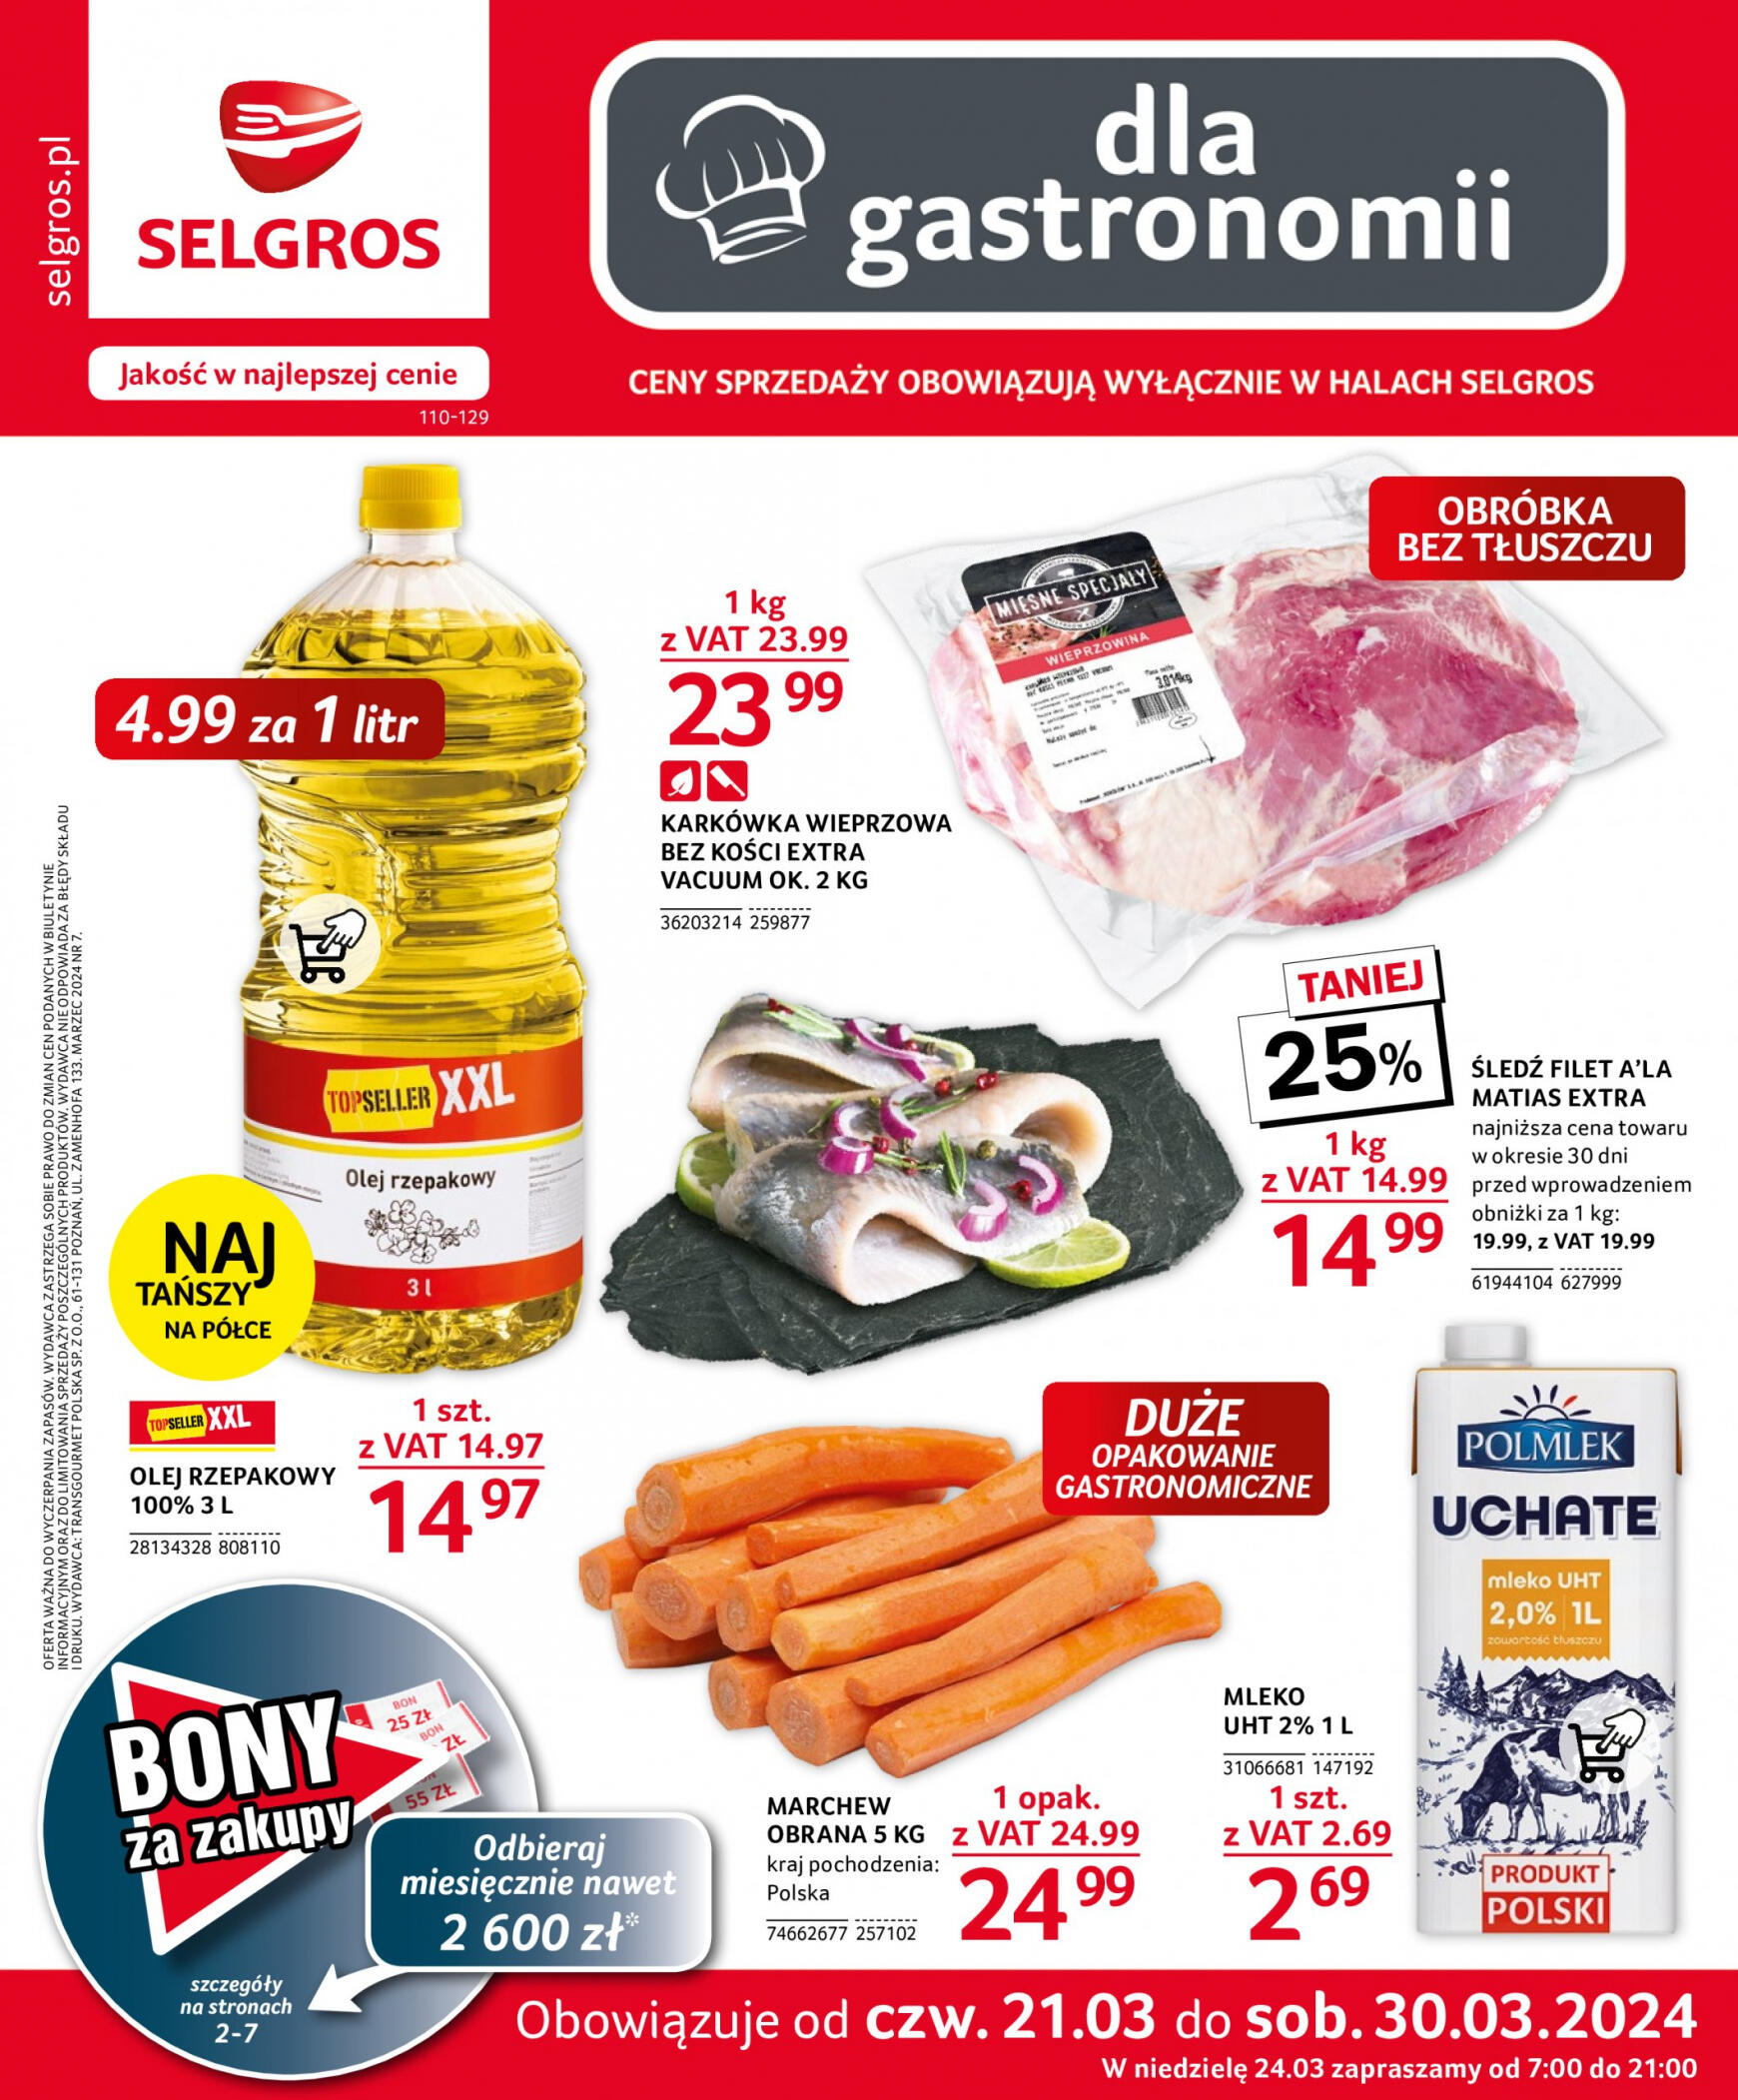 selgros - Selgros cash&carry - Selgros Gastronomia obowiązuje od 21.03.2024 - page: 1